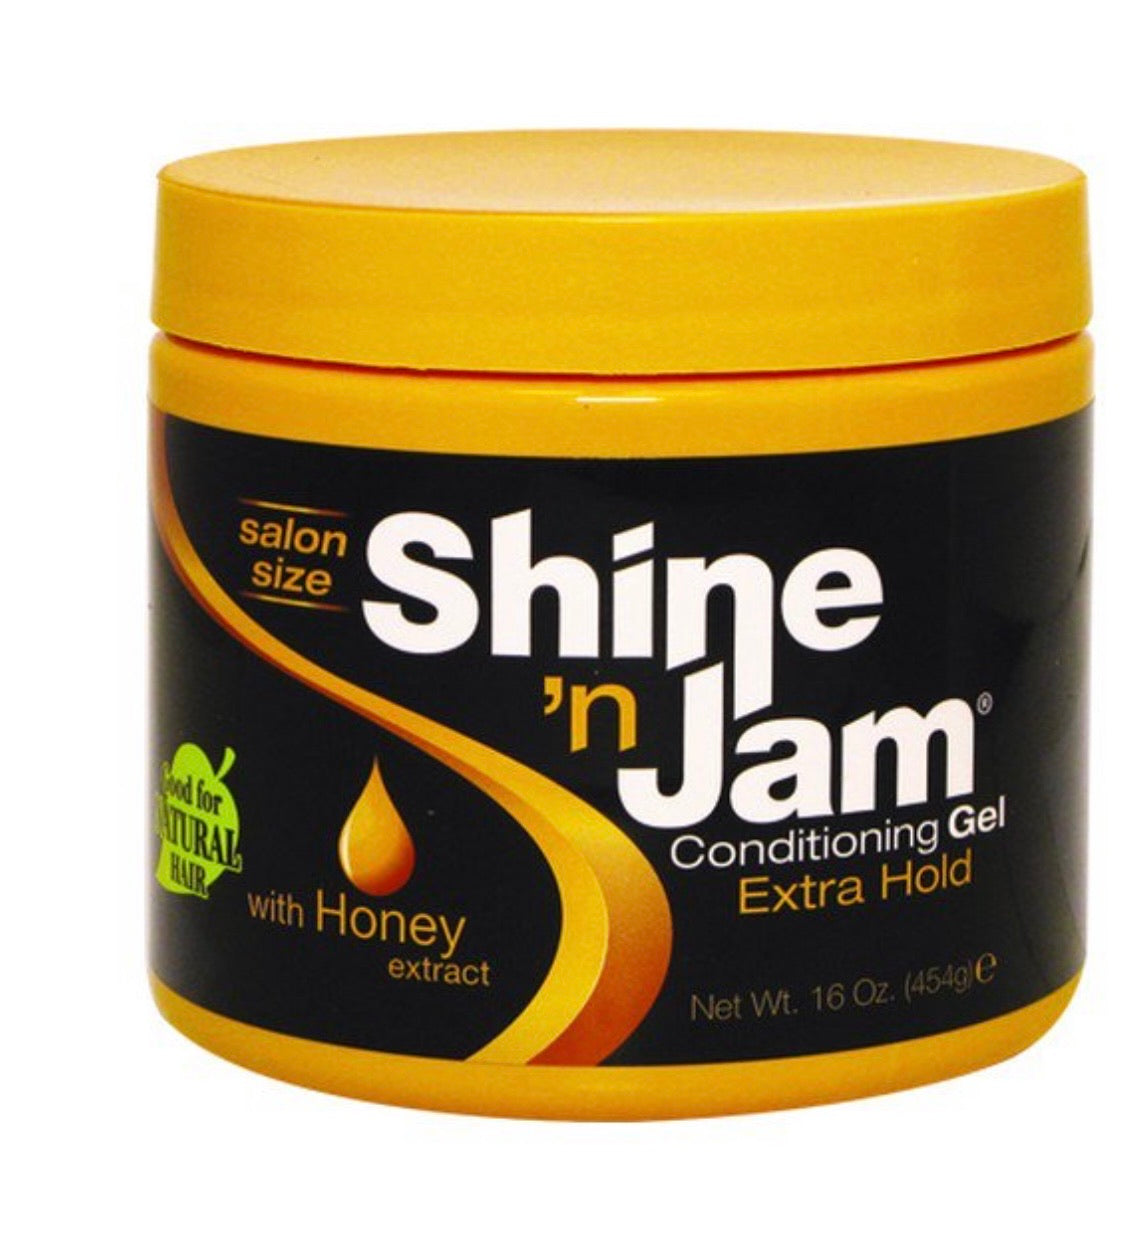 Ampro Shine N Jam Conditioning Gel Extra Hold 4 oz, 8oz or 16 oz